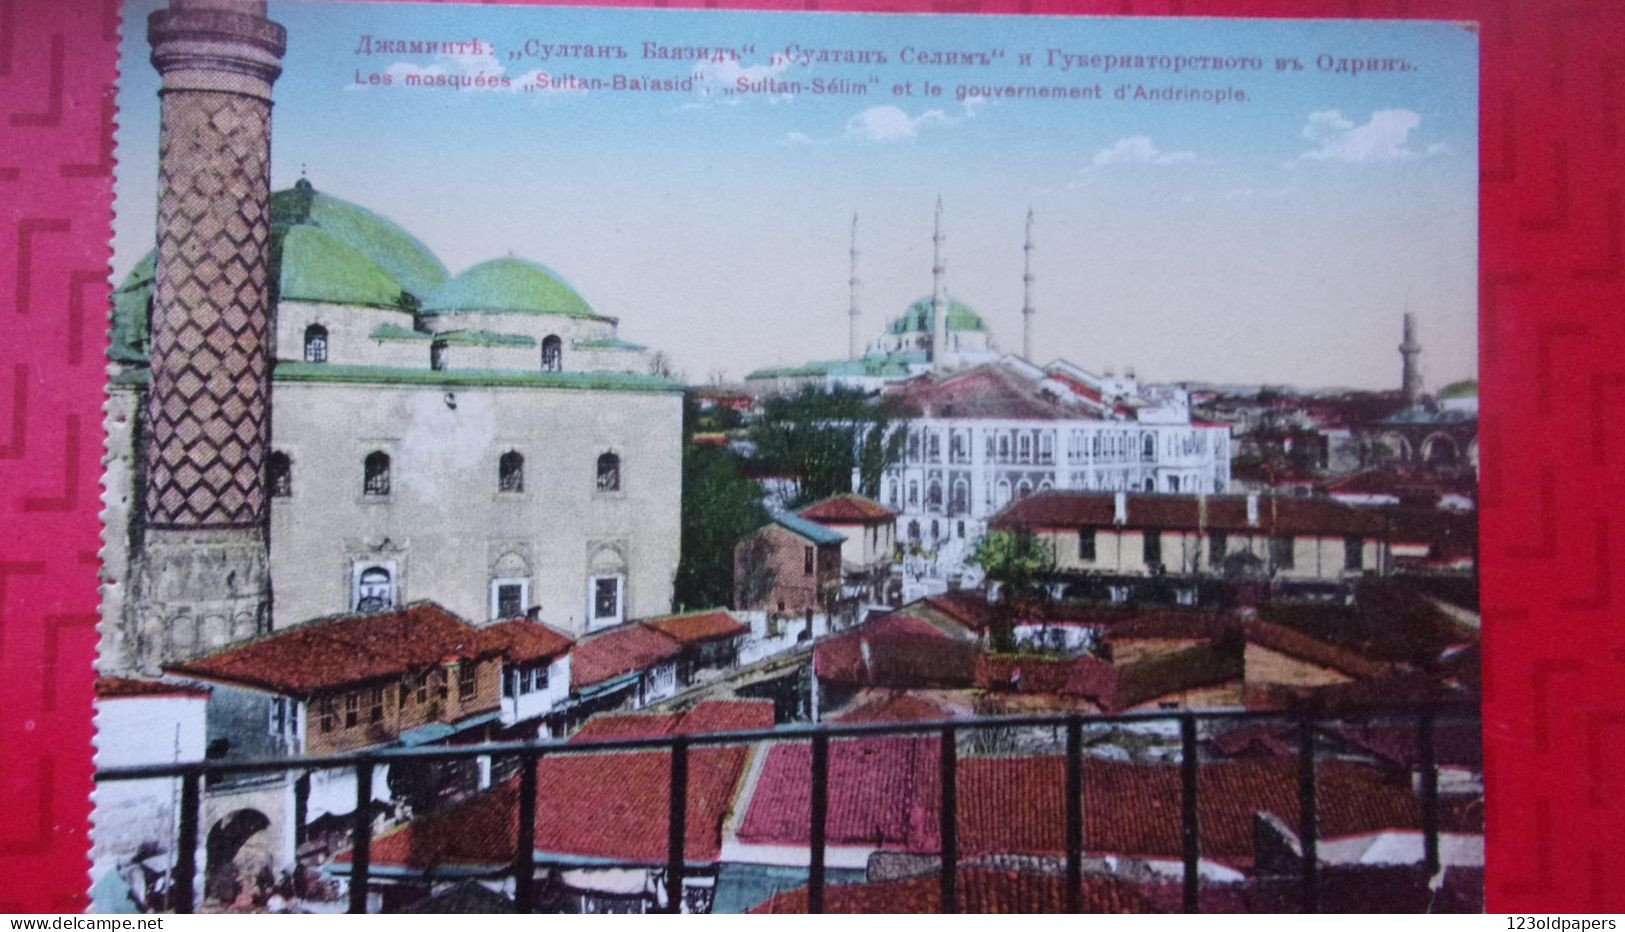 TURQUIE PROCHE BULGARIE Edirne, Ou Andrinople VUE 1919 TURKEY  MOSQUEES SULTAN BAIASID SULTAN SELIM GOUVERNEMENT - Turquie